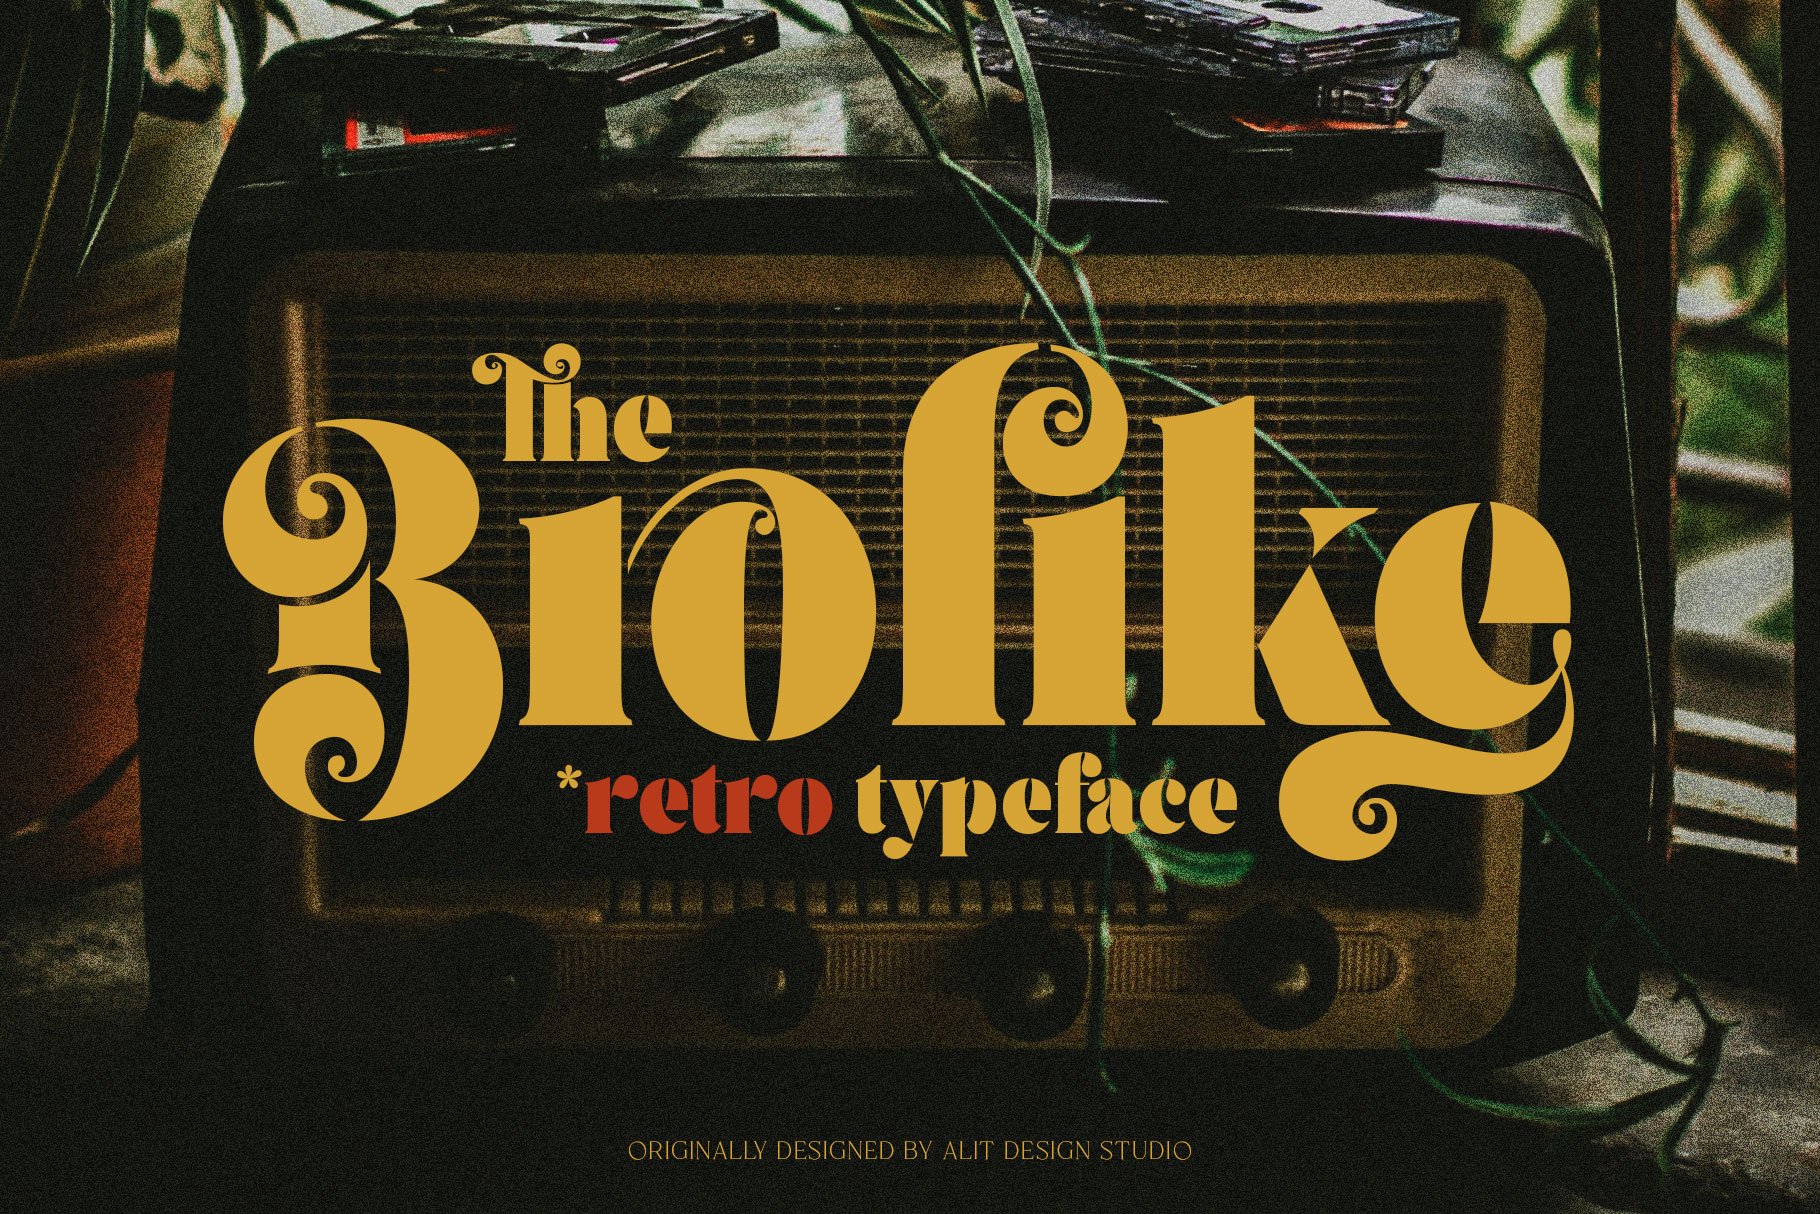 Brolike Typefacecover image.